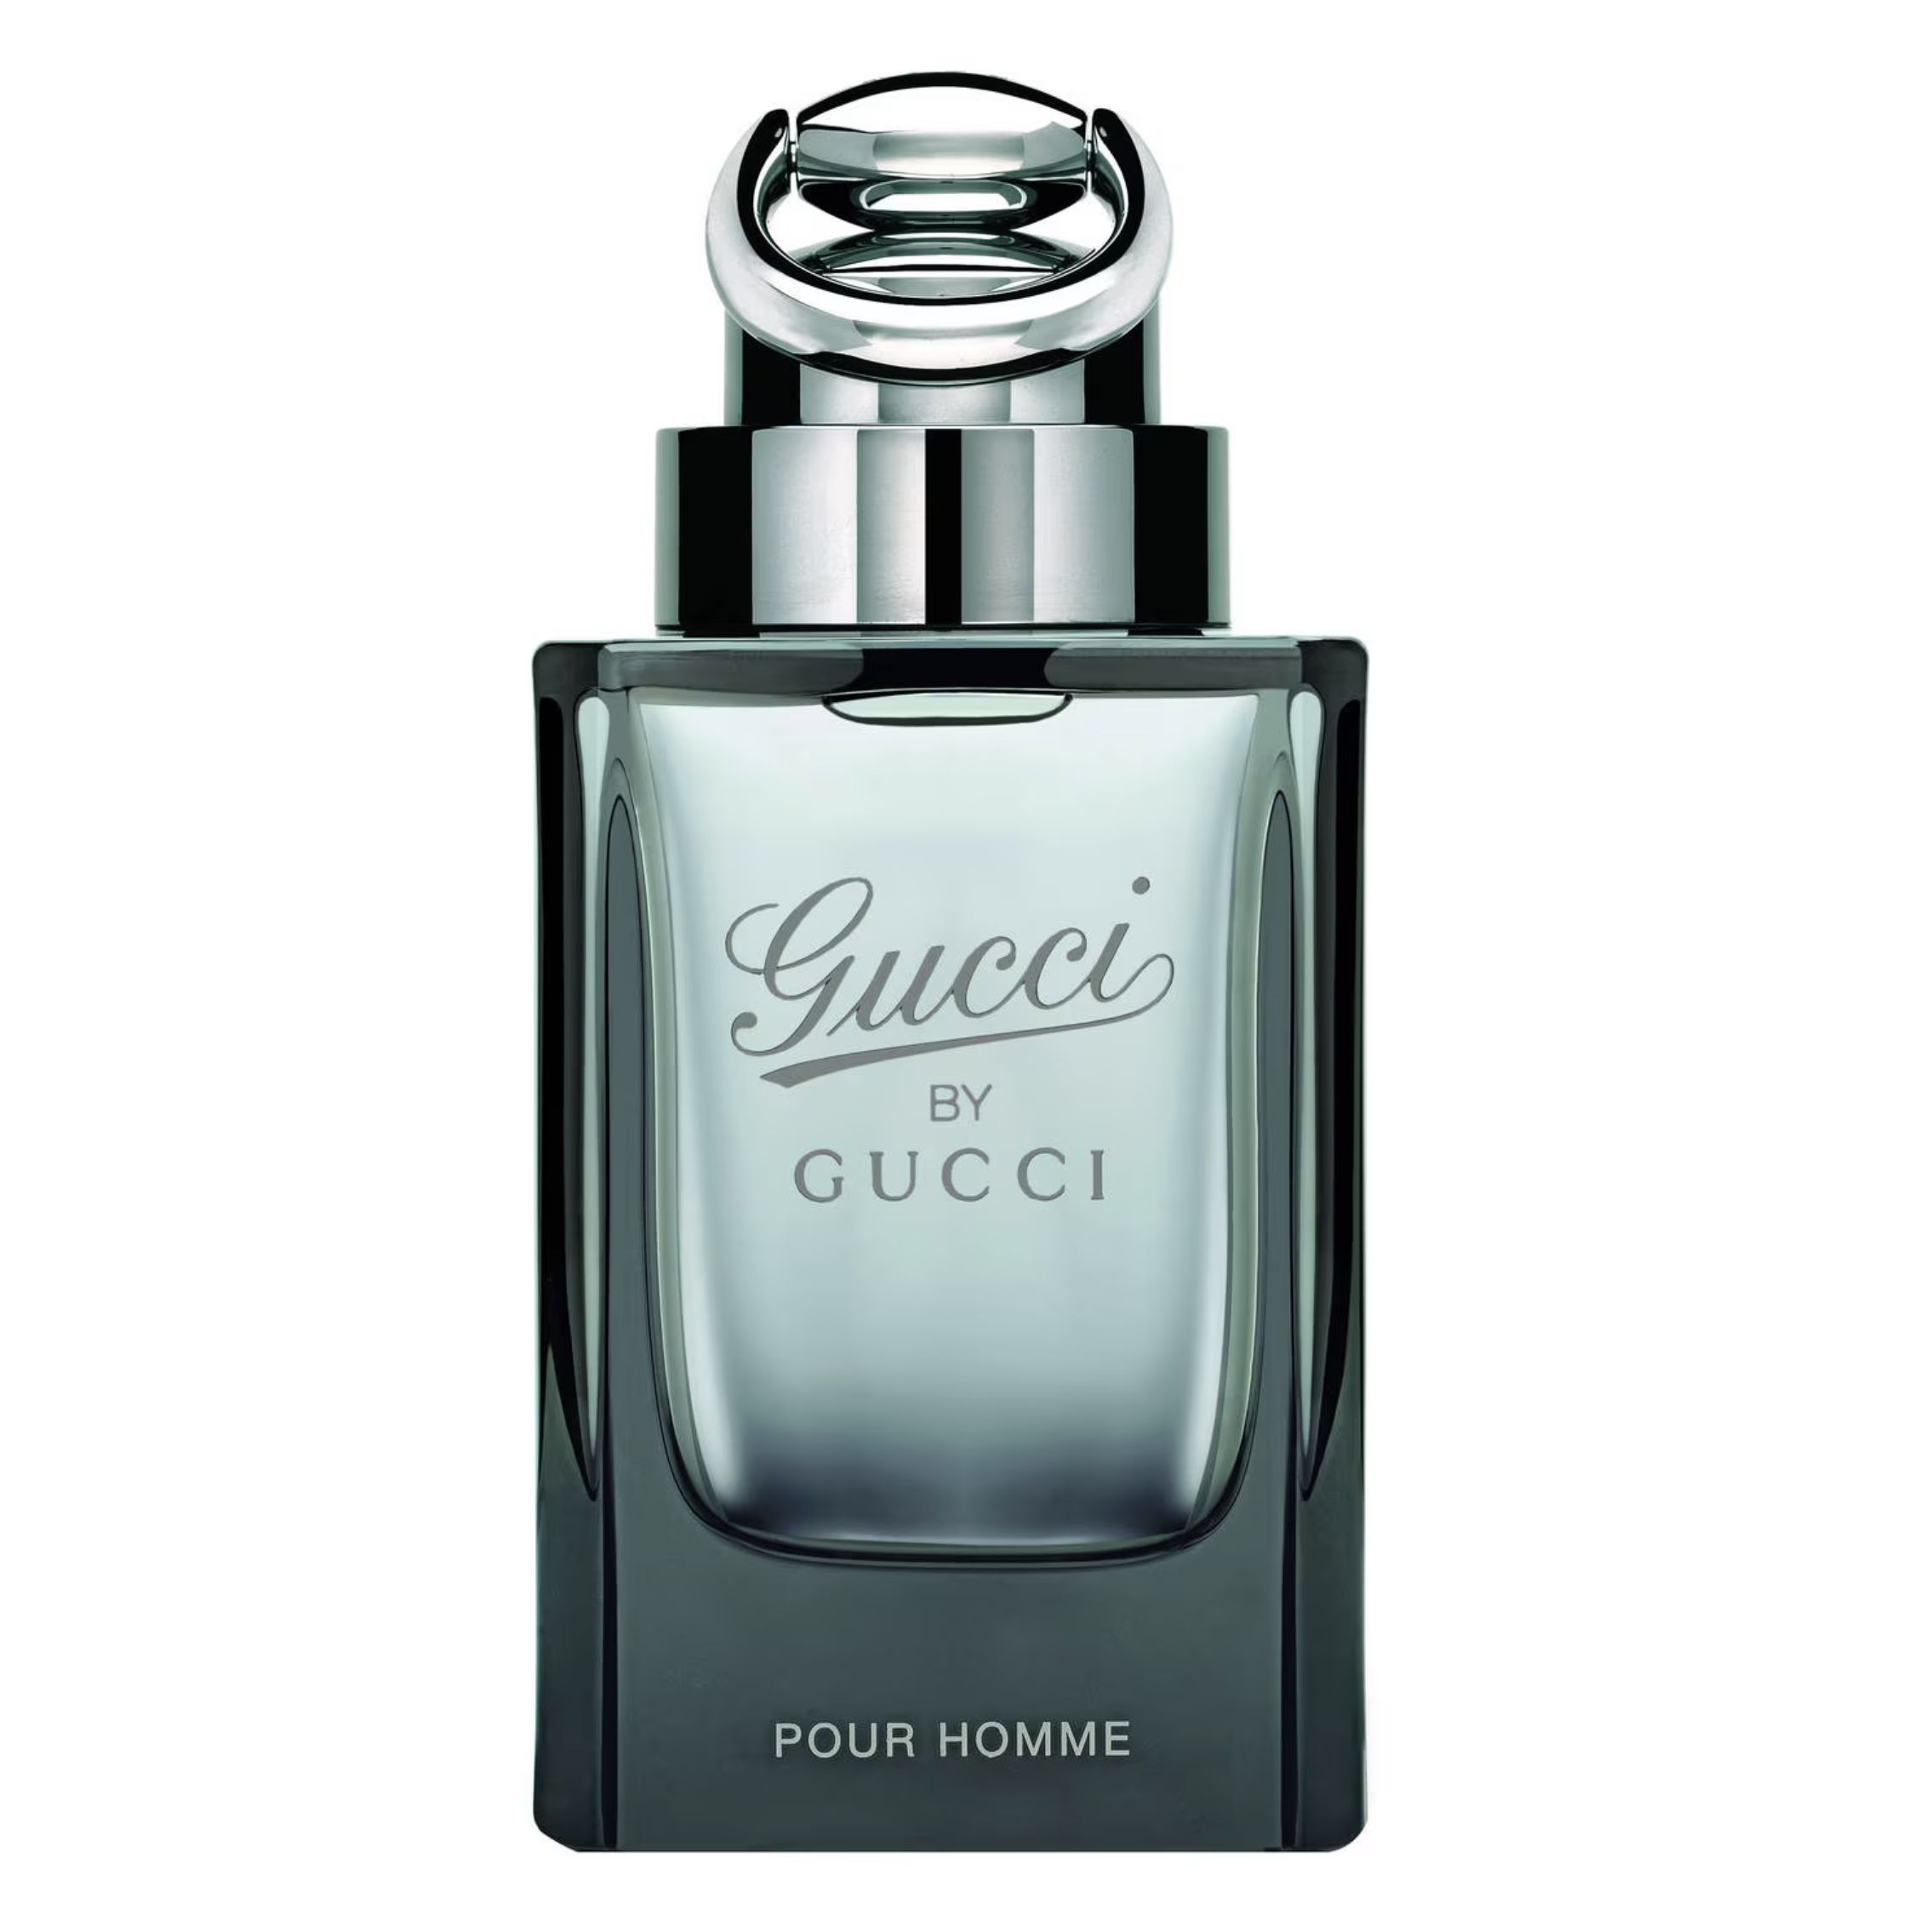 Gucci pour homme купить. Gucci by Gucci pour homme EDT, 90 ml. Gucci "Gucci by Gucci pour homme". Туалетная вода Gucci Gucci by Gucci pour homme. Gucci pour homme 90 ml.